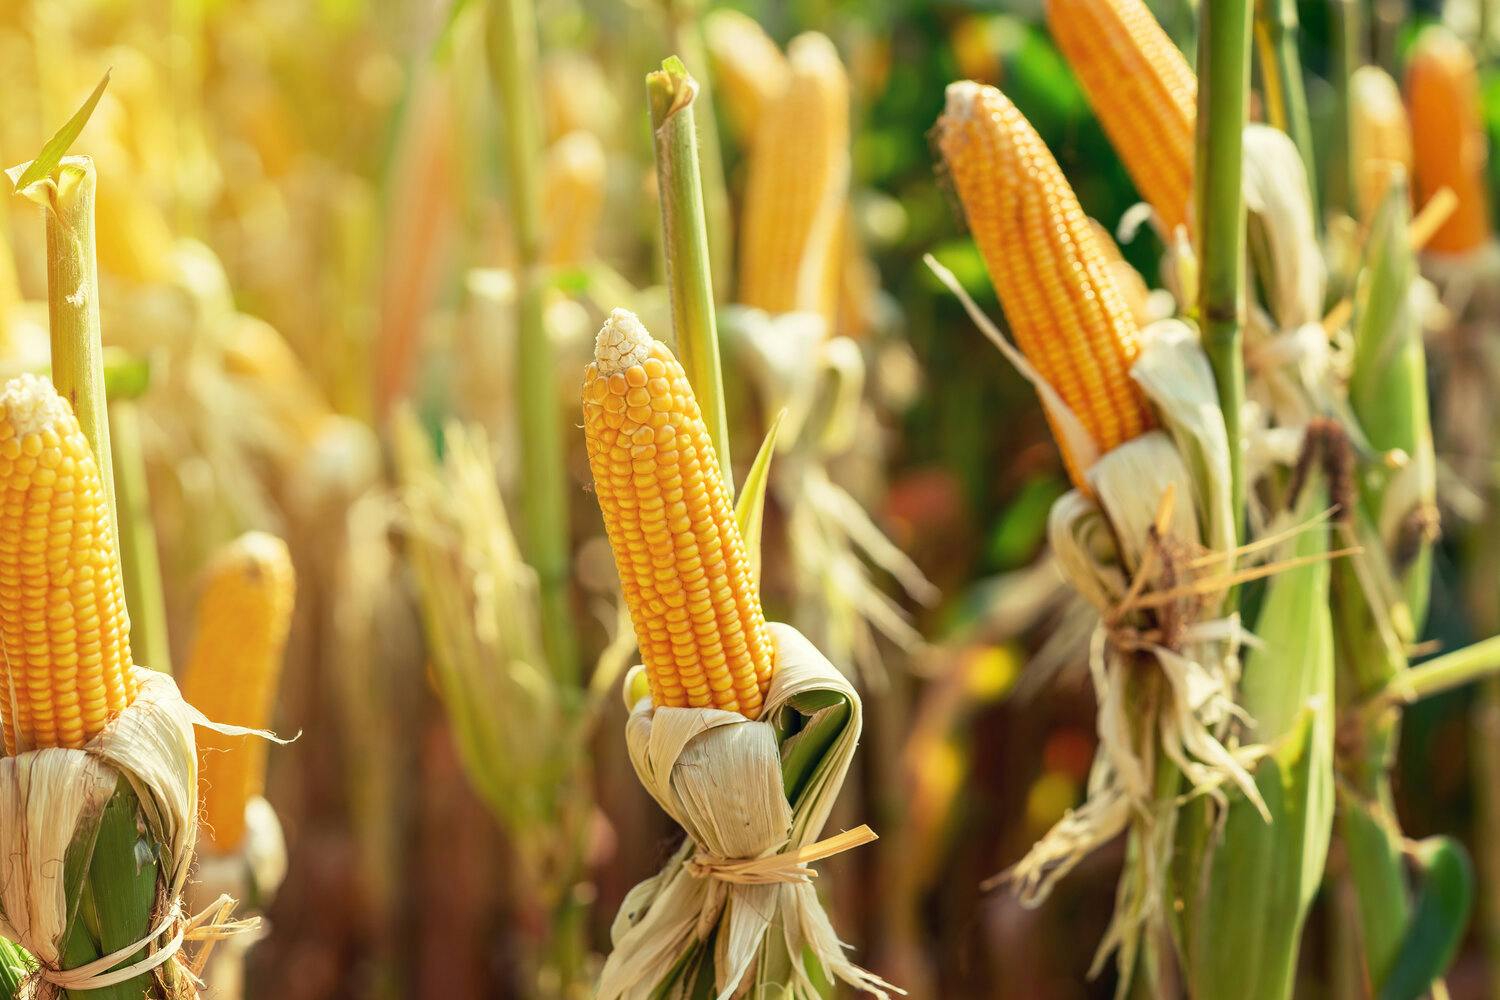 Corn in Field - Main Image